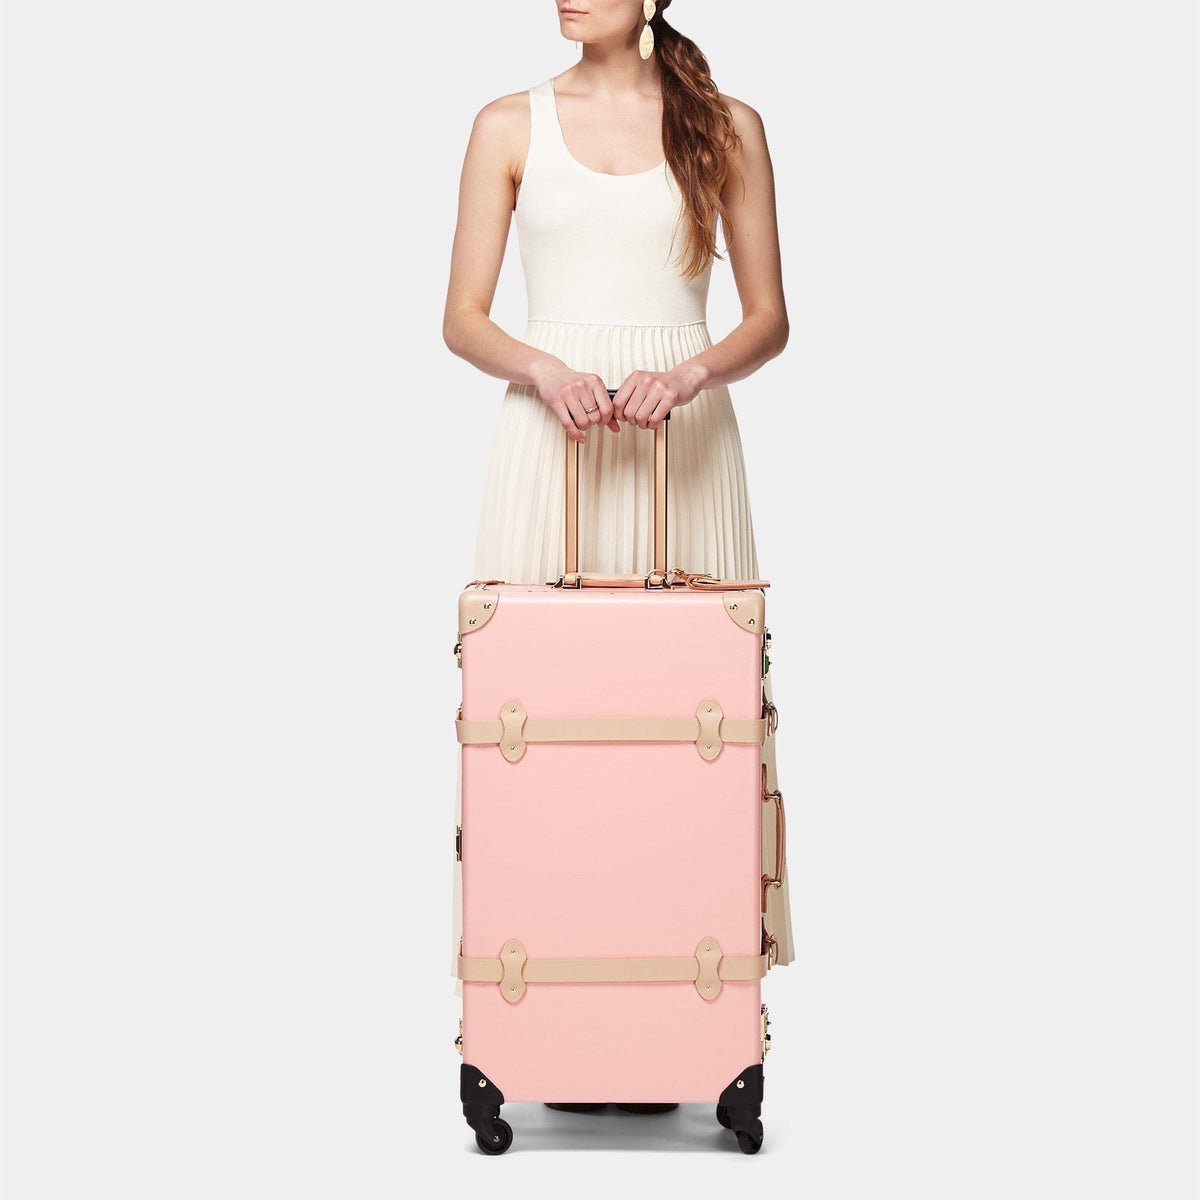 Vintage Rolling Luggage Set Spinner Women Travel Bag Suitcase